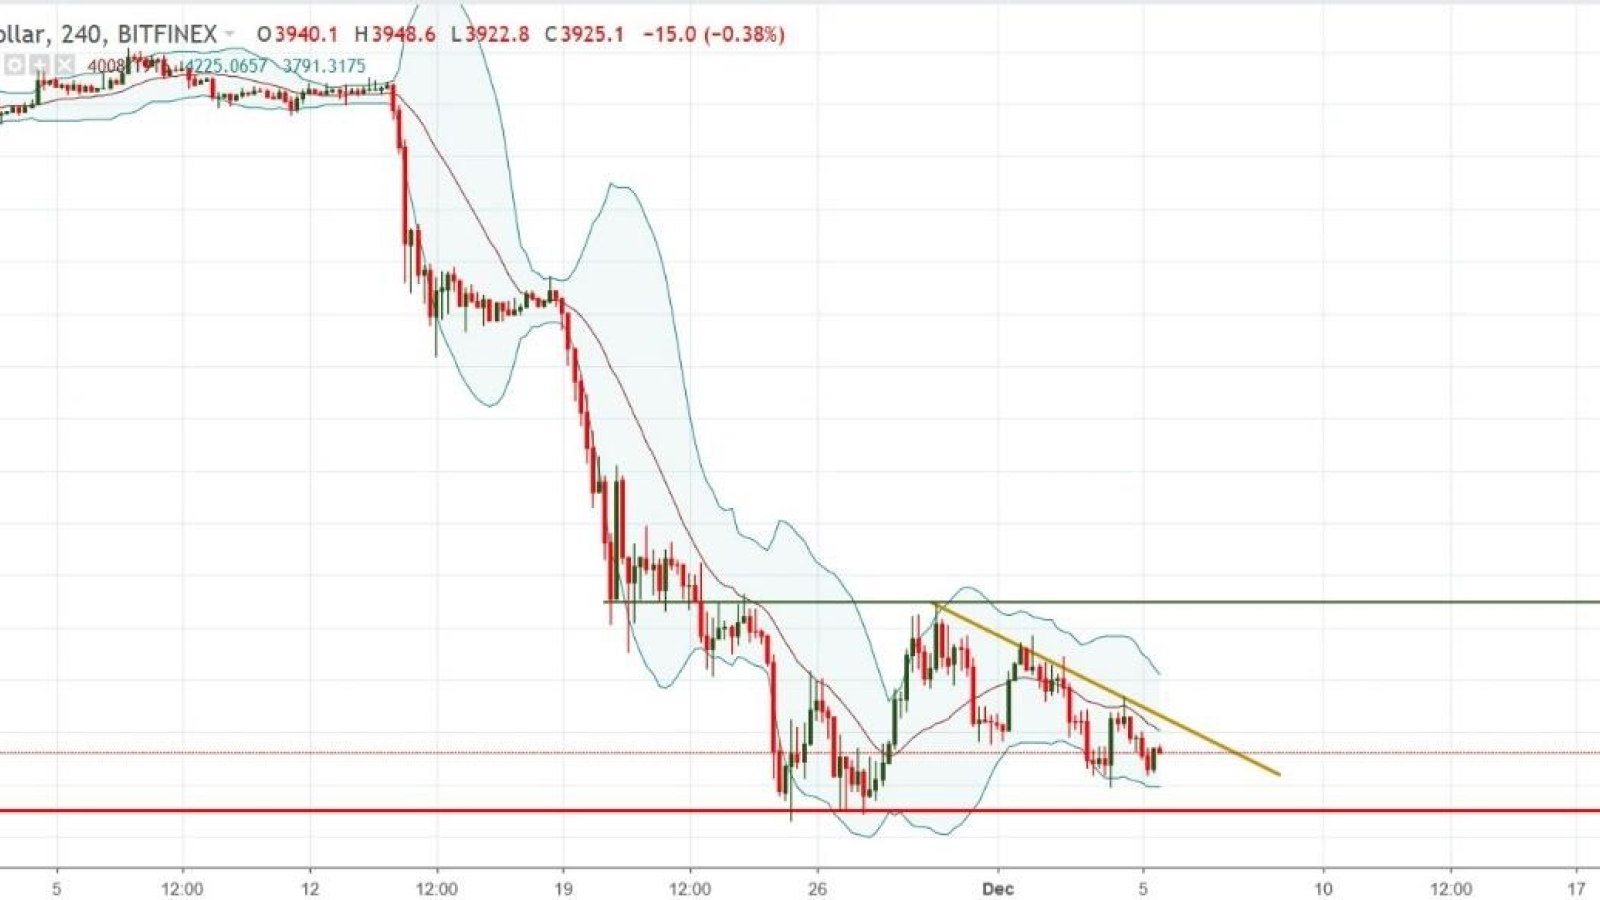 Chart Analysis - BTC/USD